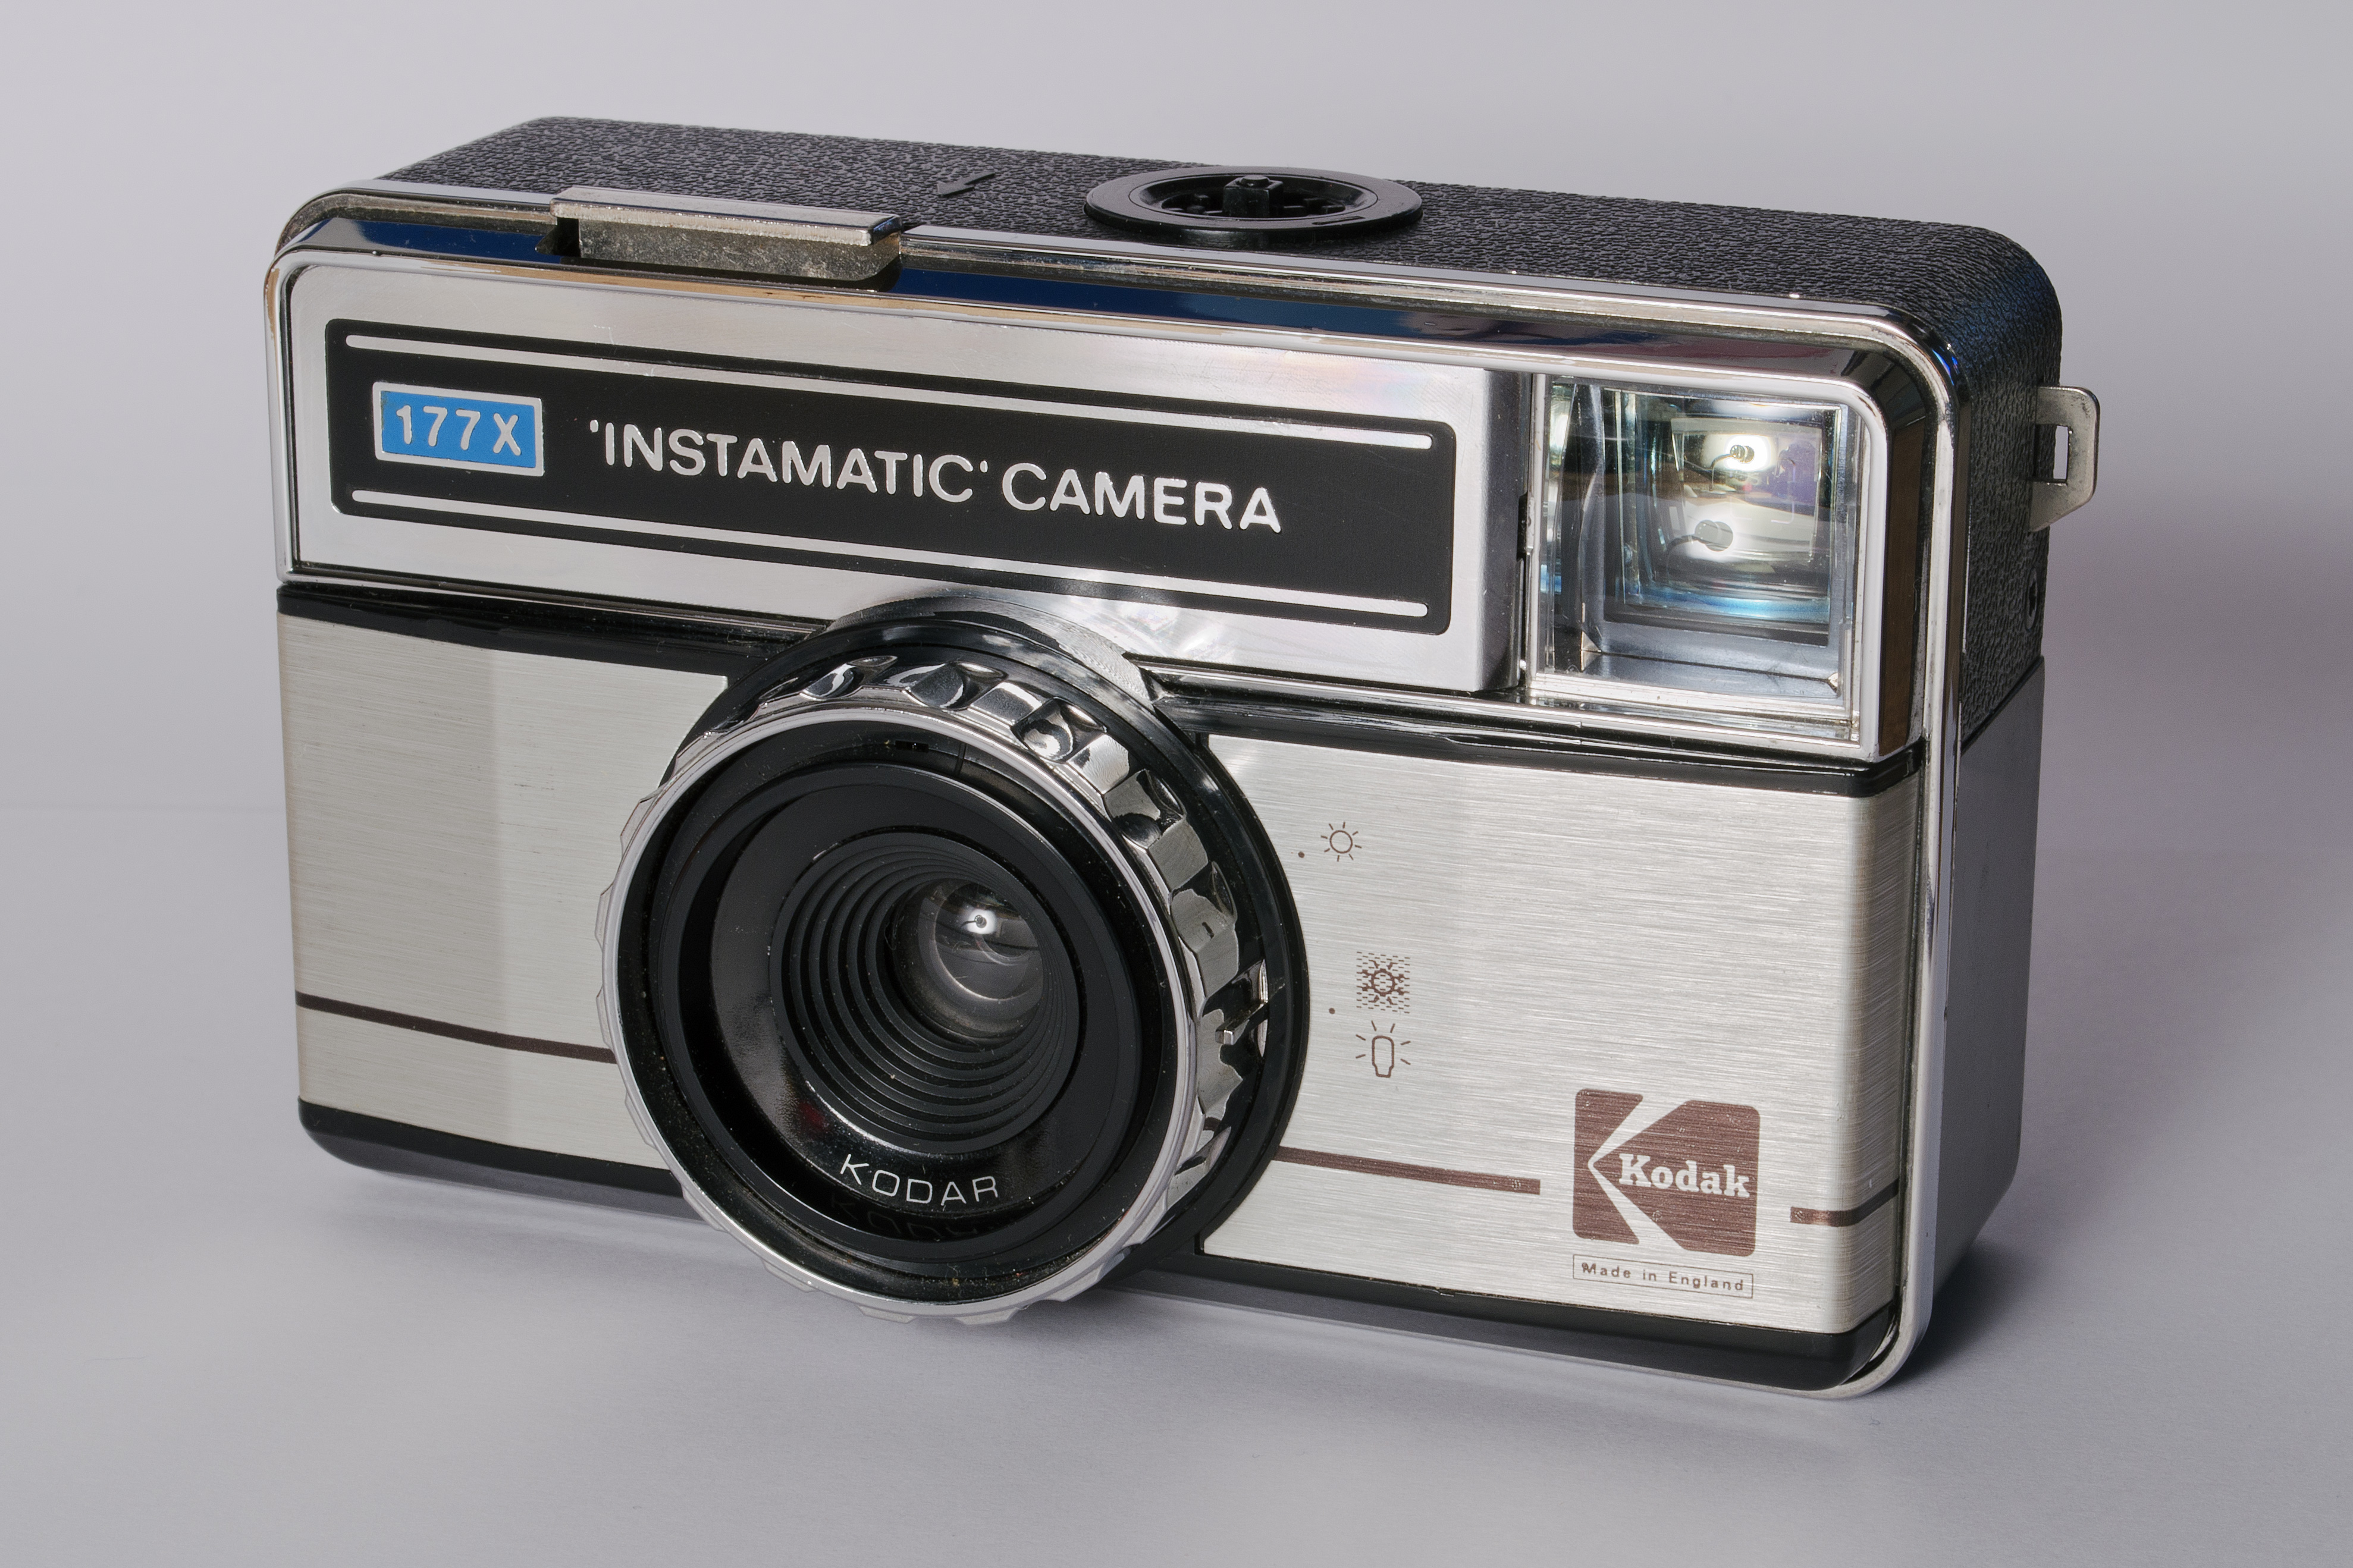 Kodak Instamatic 177X angle